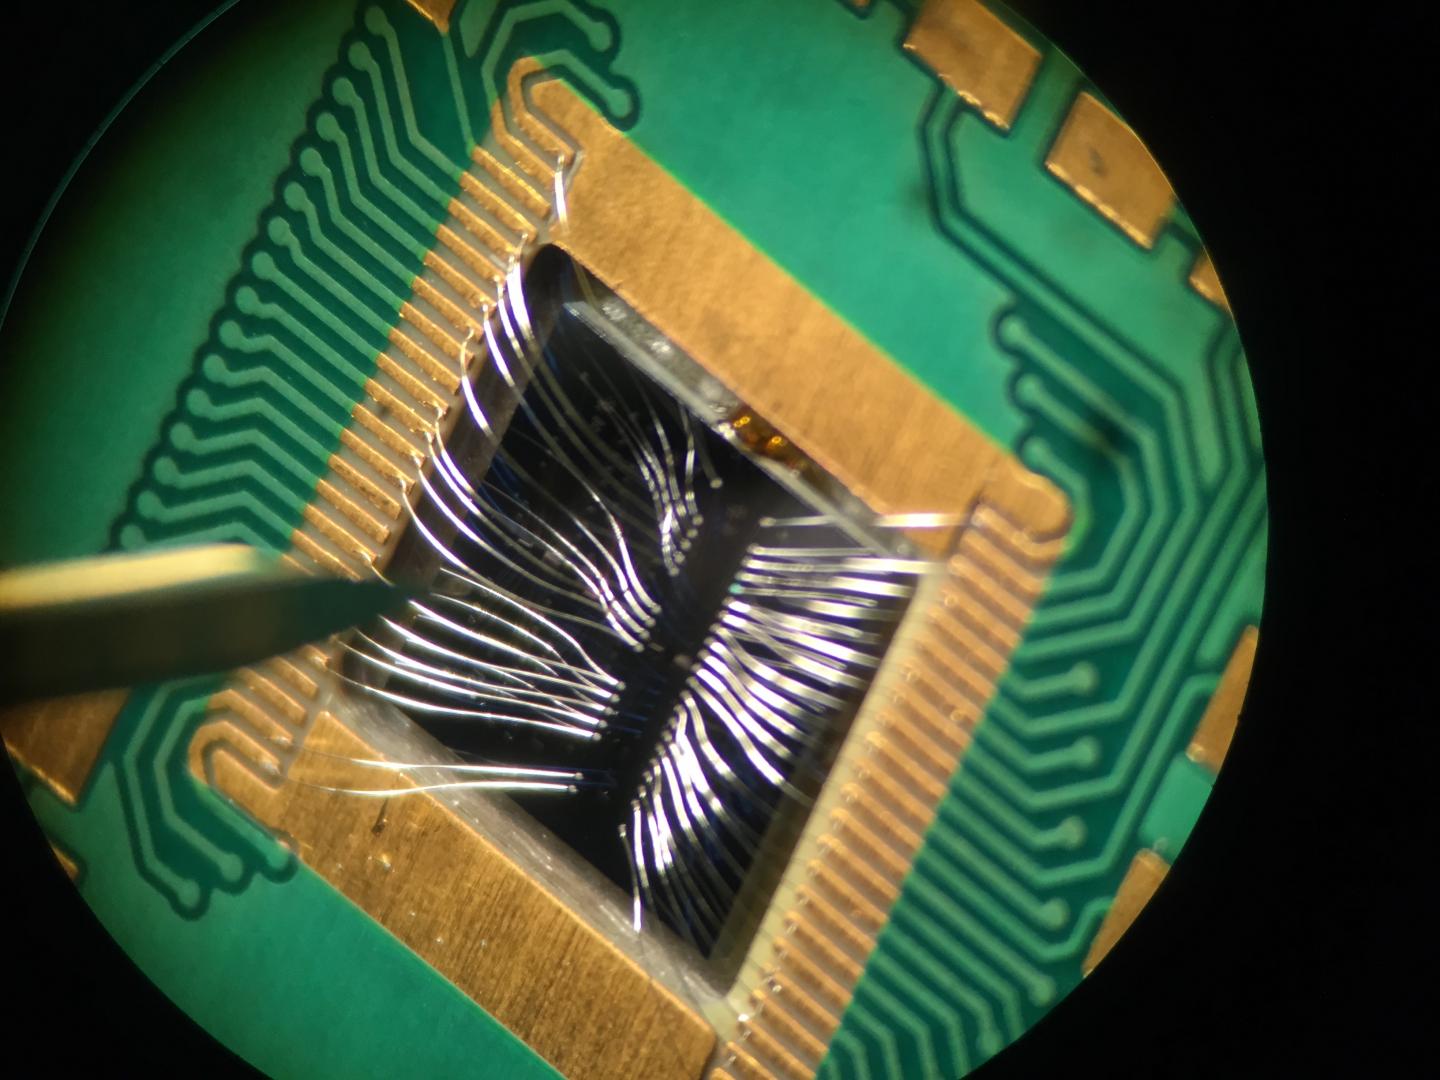 Two-Qubit Silicon-Based Quantum Gate